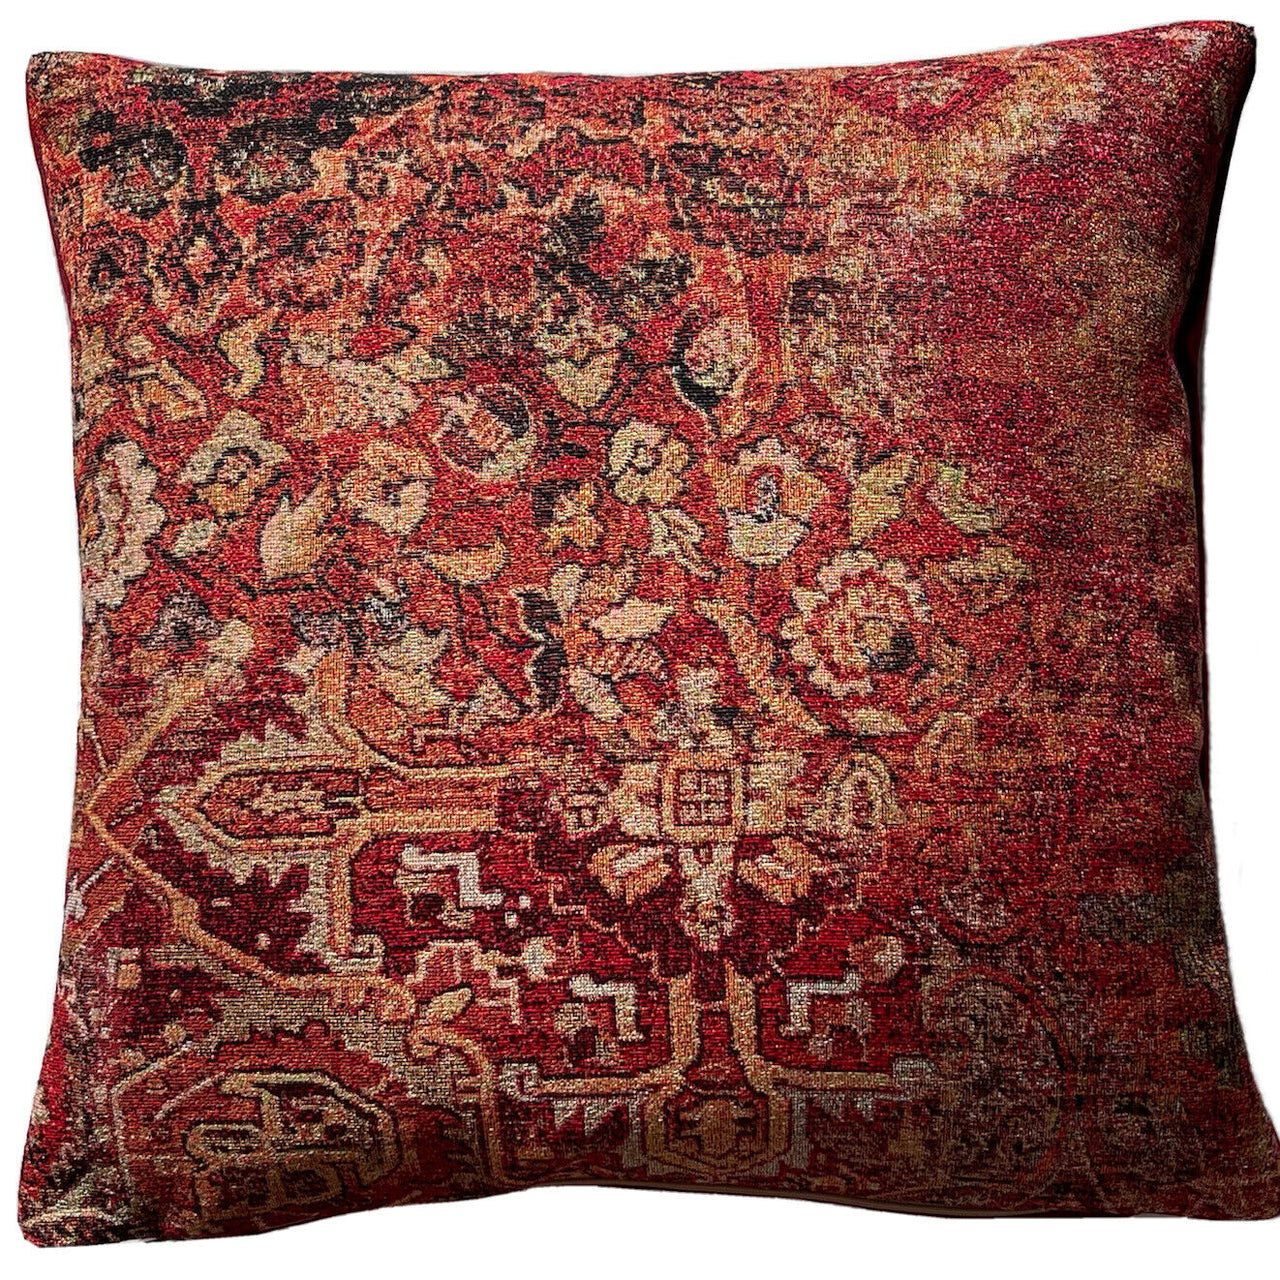 Vintage oriental kilim style decorative pillowcase